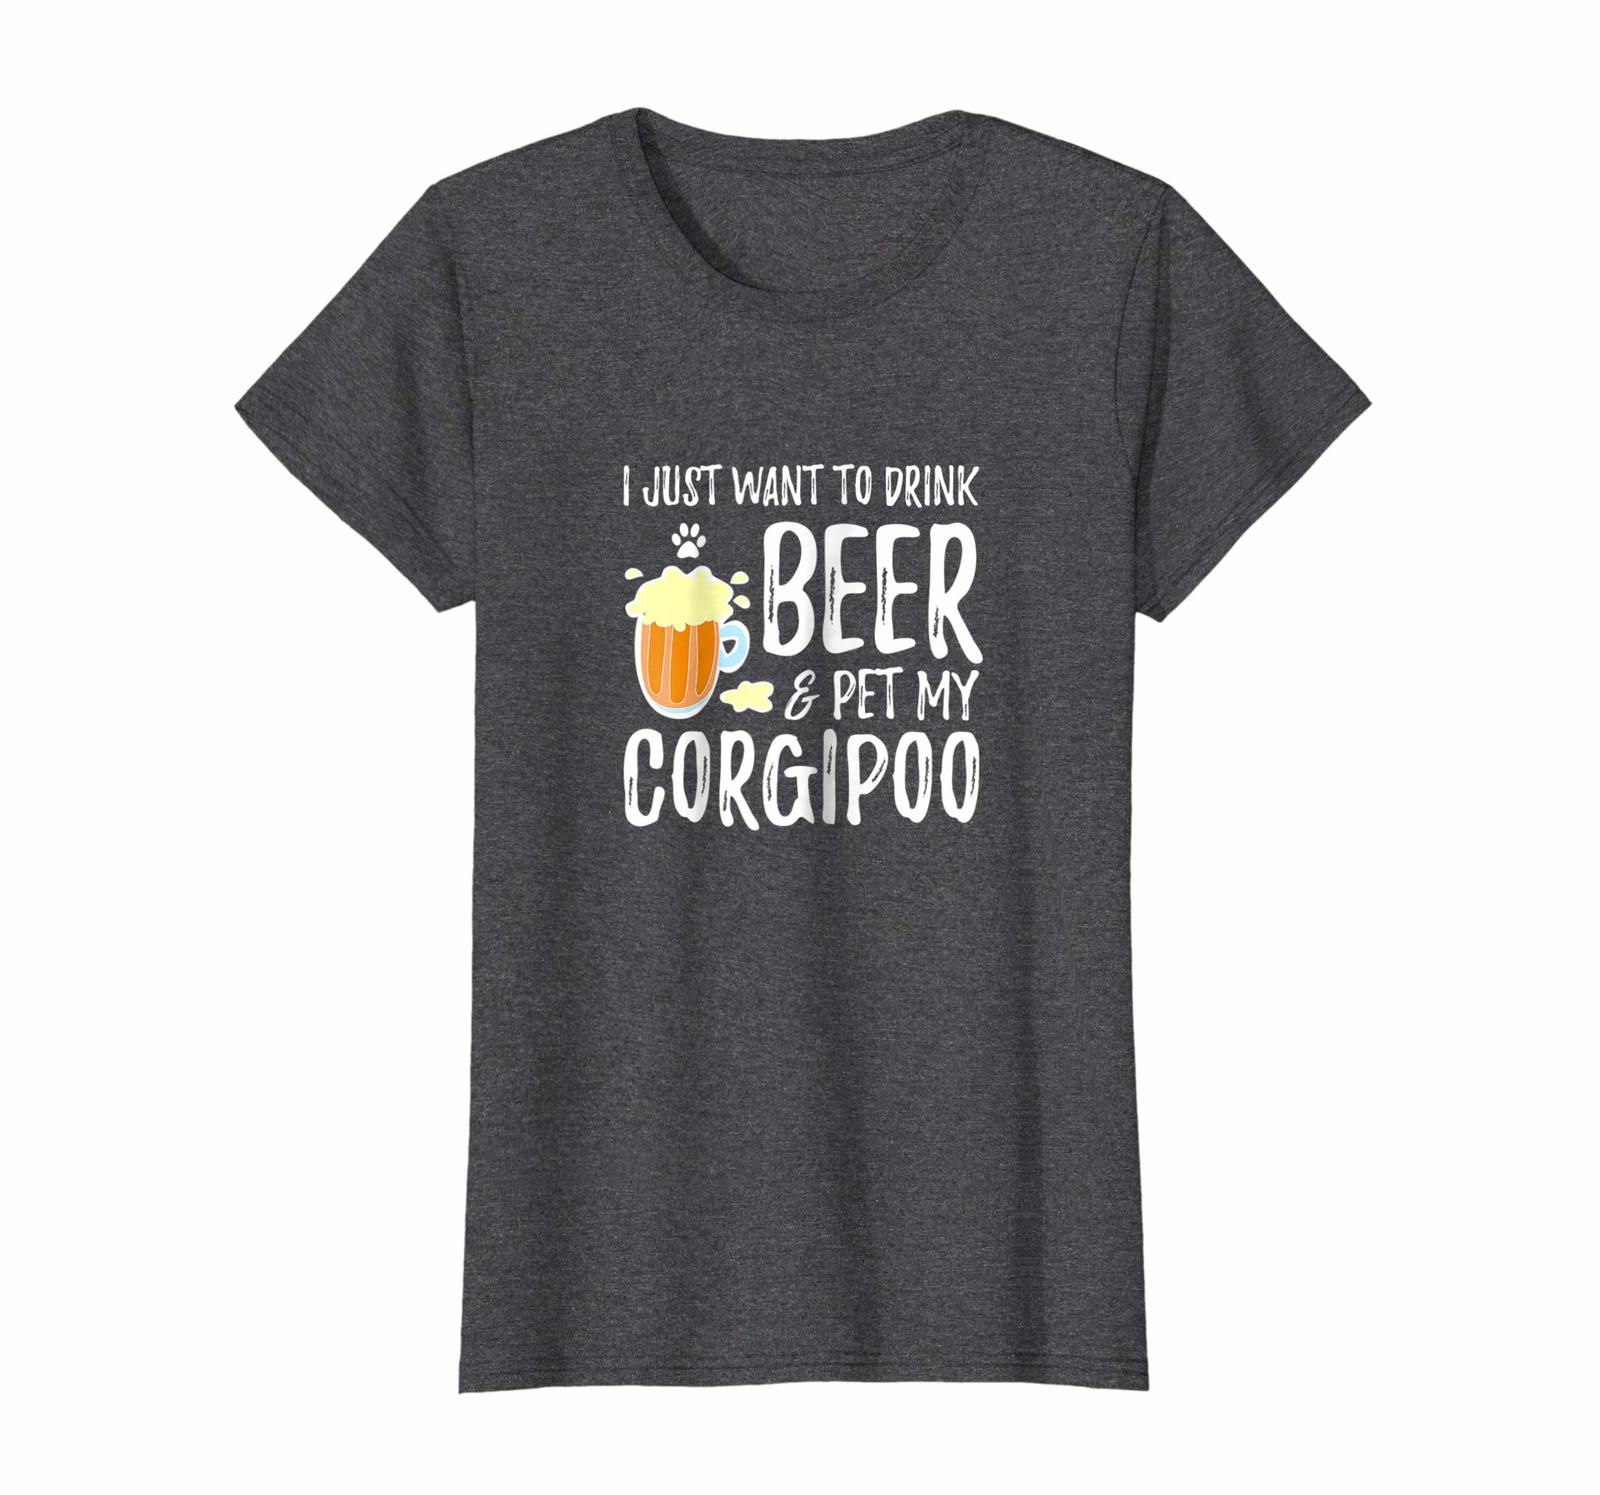 Dog Fashion - Beer and Corgipoo Shirt Funny Dog Mom or Dog Dad Gift Idea Wowen